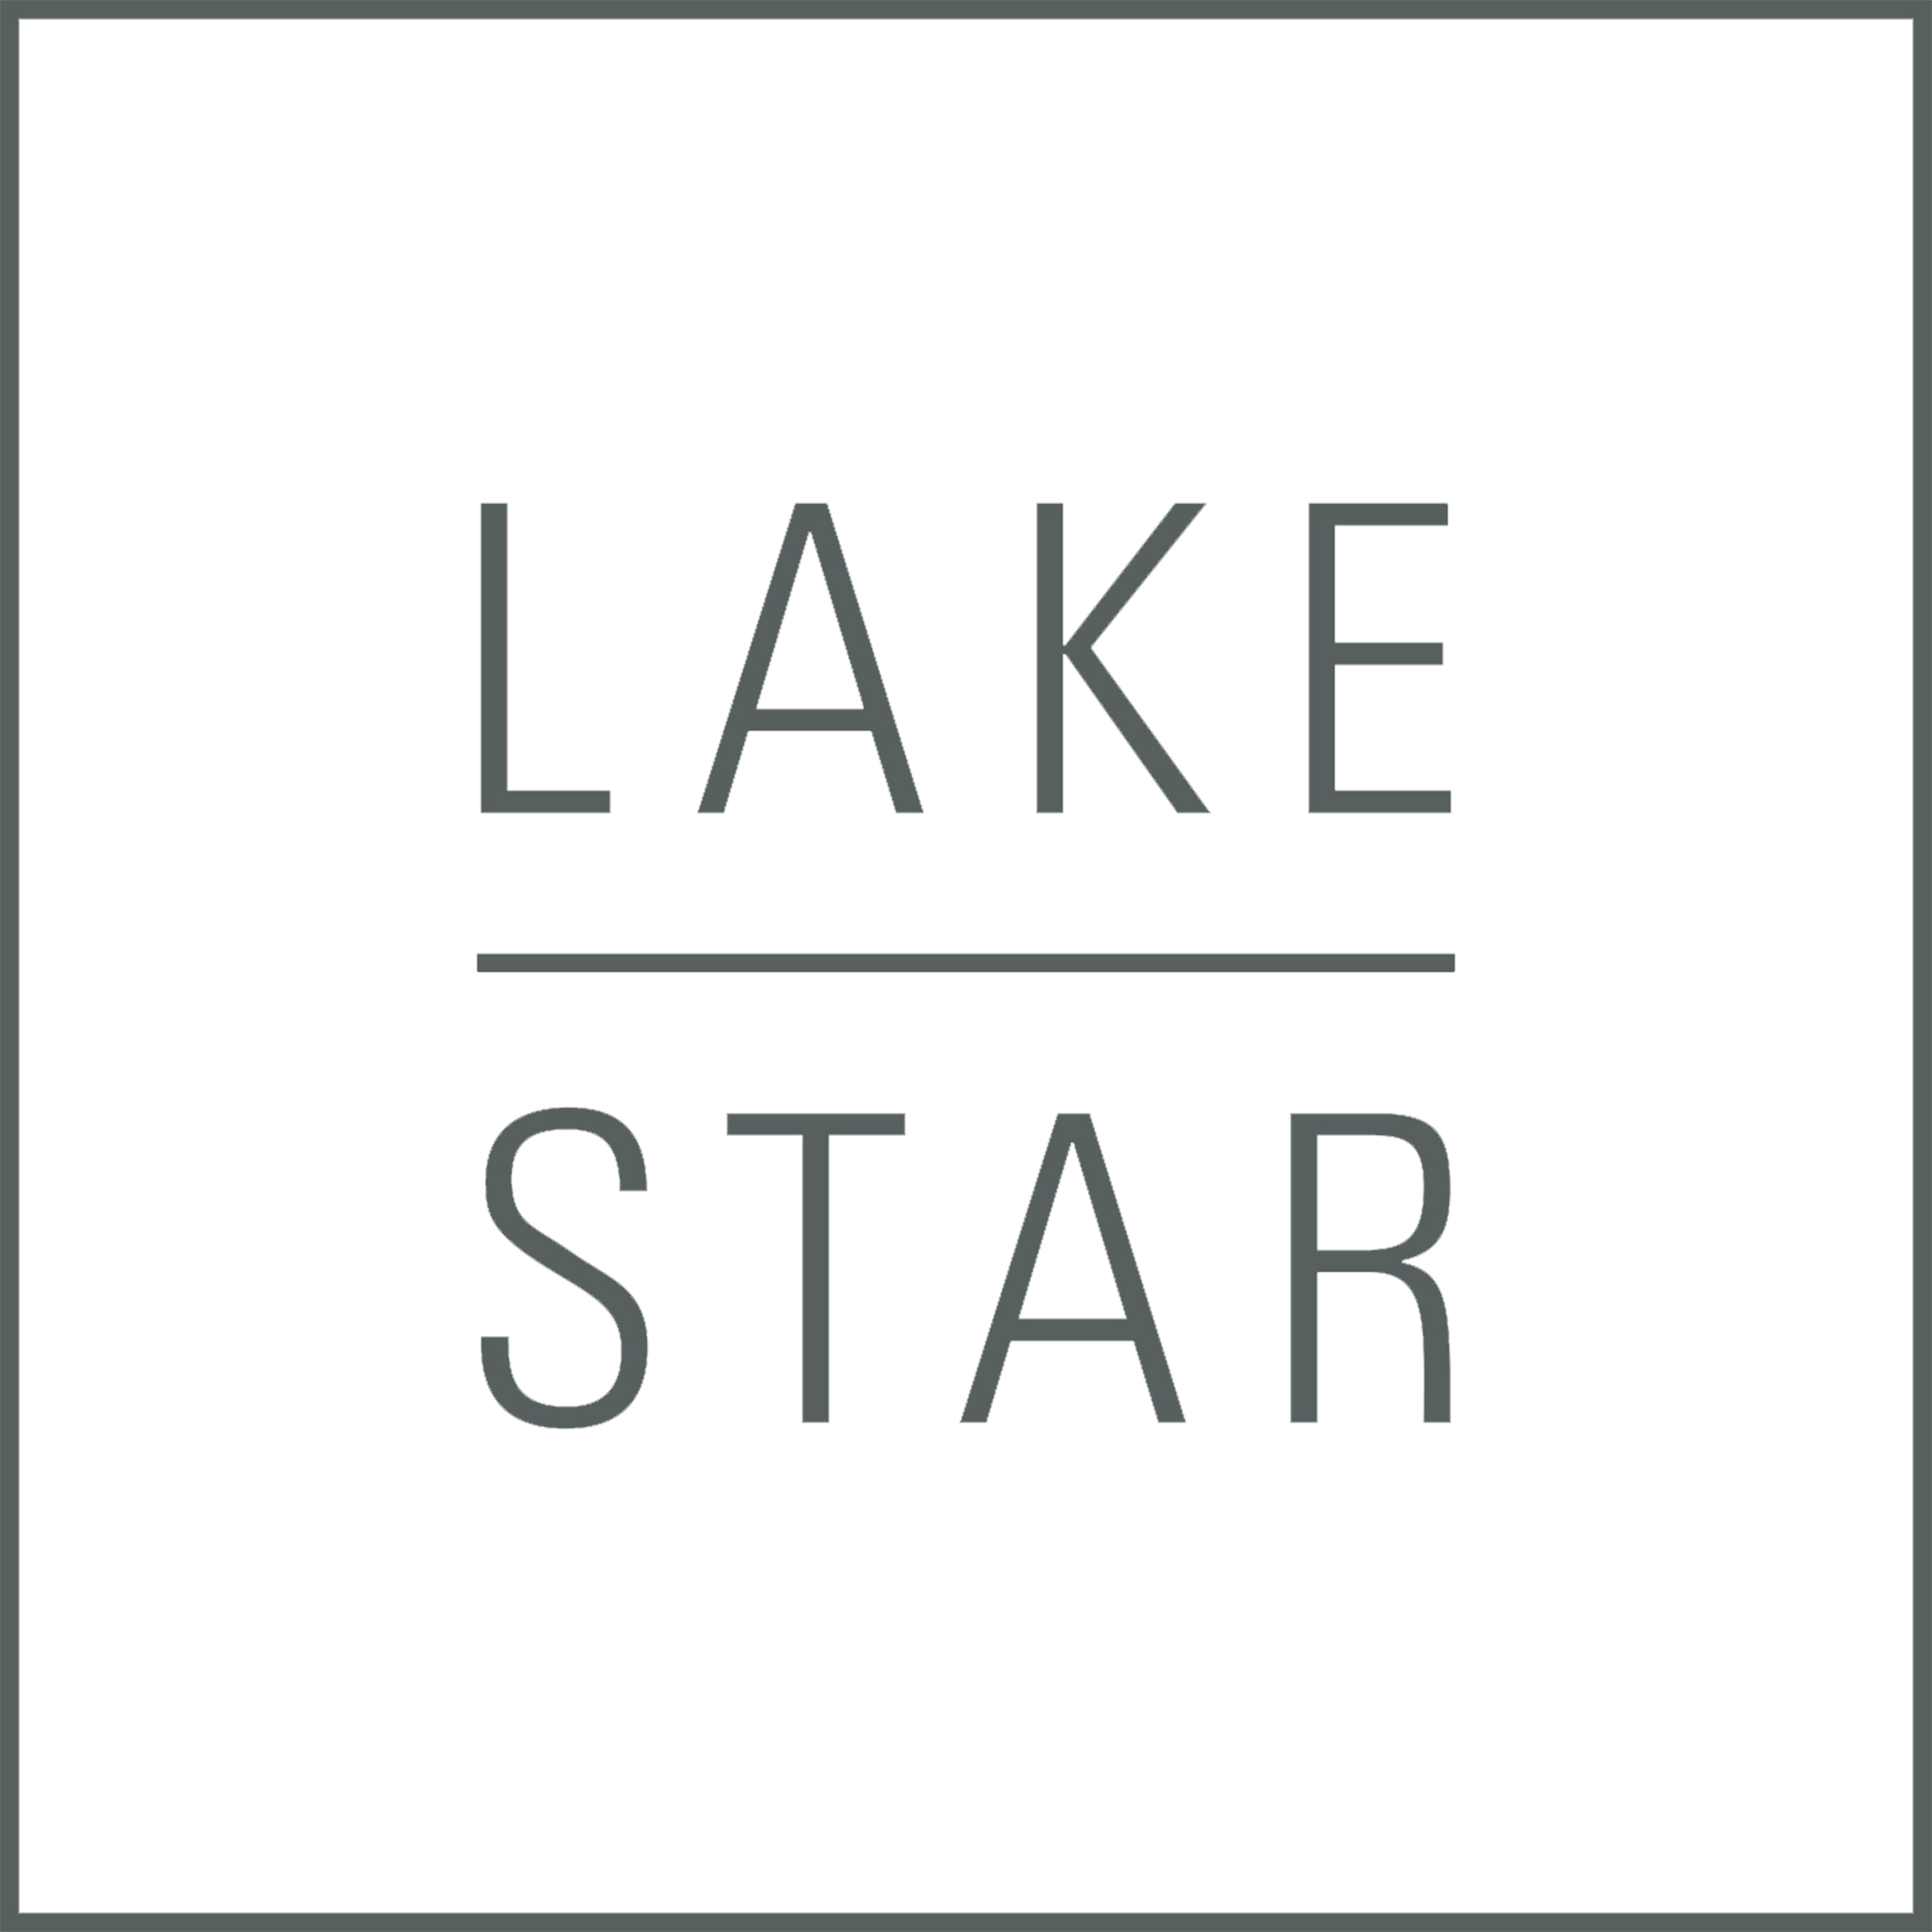 Lakestar | Lead investor